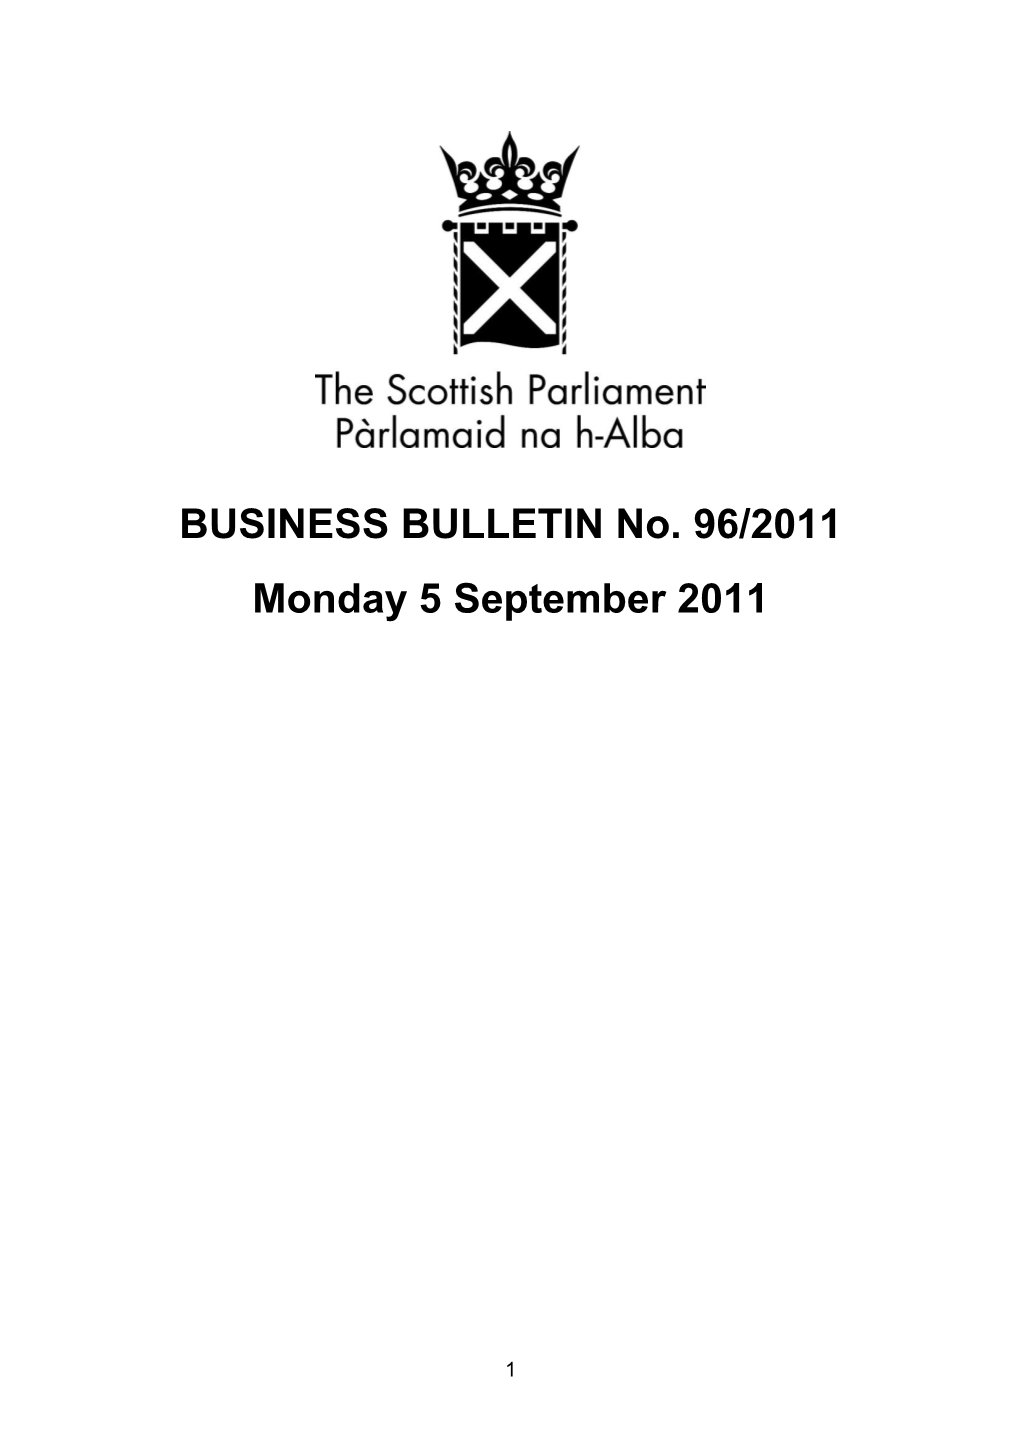 BUSINESS BULLETIN No. 96/2011 Monday 5 September 2011